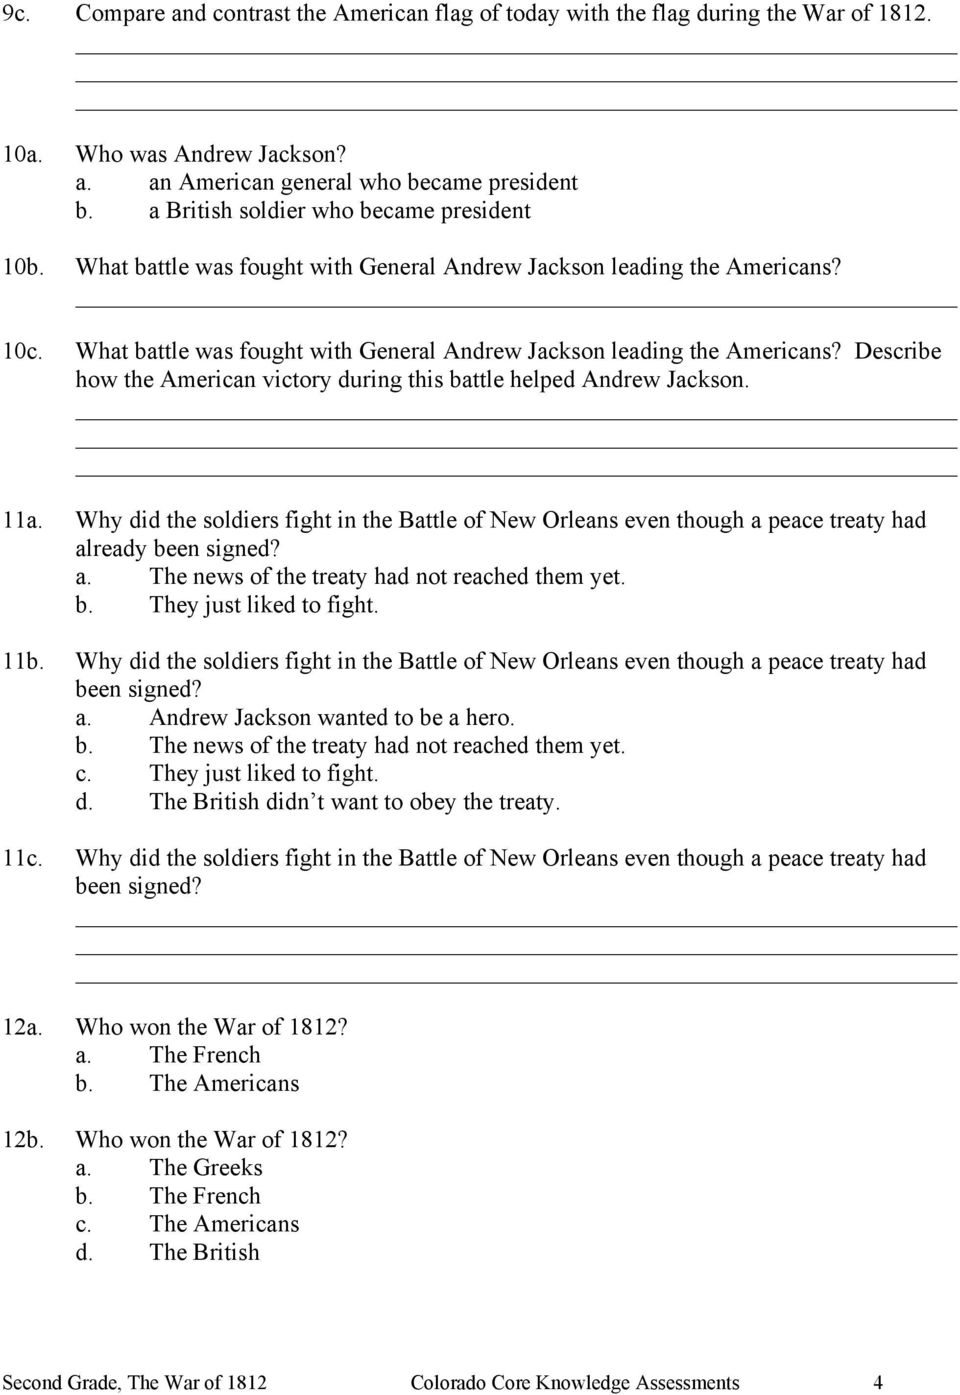 Second Grade The War of 22 Assessment - PDF Free Download For War Of 1812 Worksheet